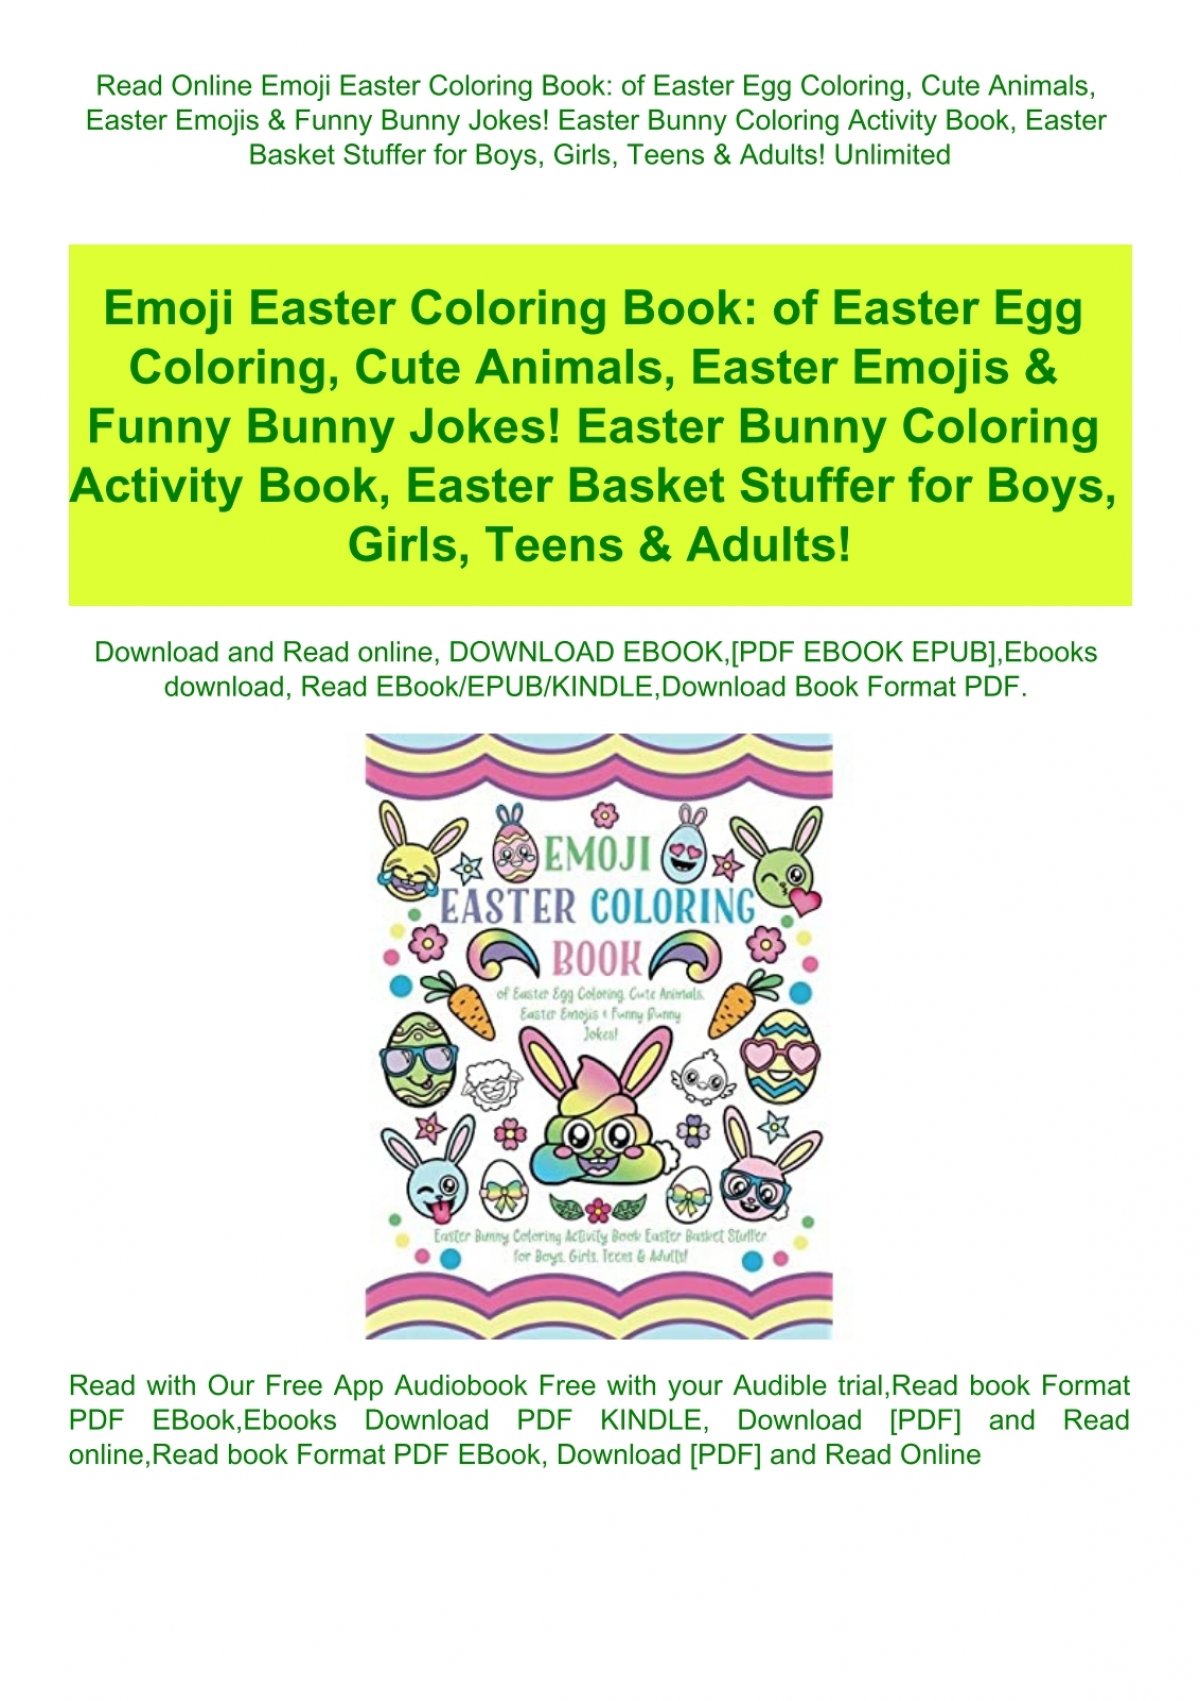 Download Read Online Emoji Easter Coloring Book Of Easter Egg Coloring Cute Animals Easter Emojis Amp Amp Funny Bunny Jokes Easter Bunny Coloring Activity Book Easter Basket Stuffer For Boys Girls Teens Amp Amp Adults